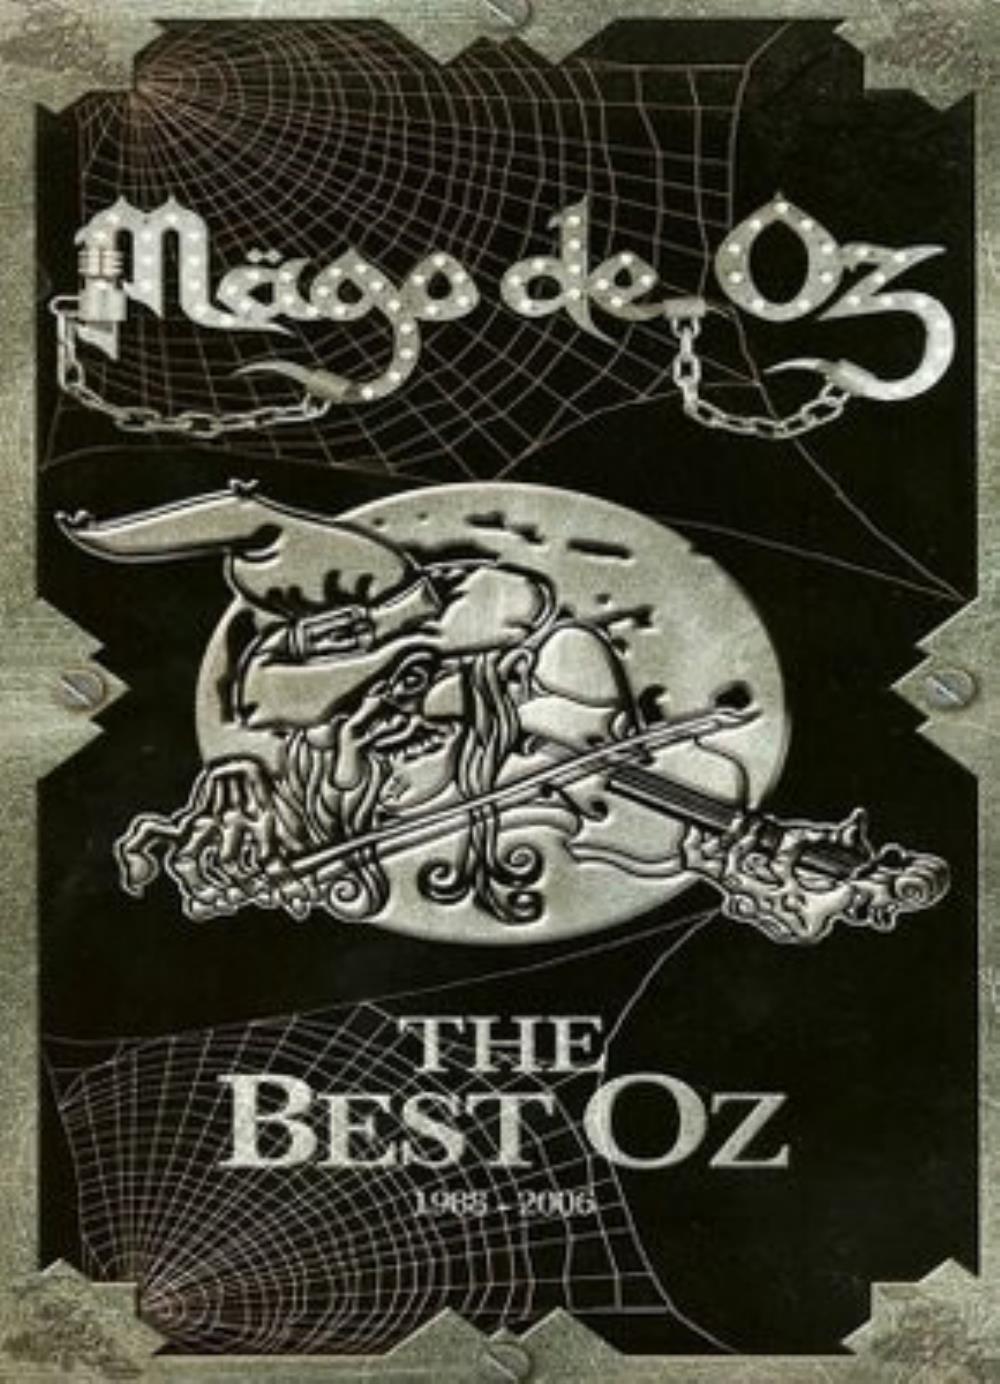 Mgo De Oz The Best Oz album cover